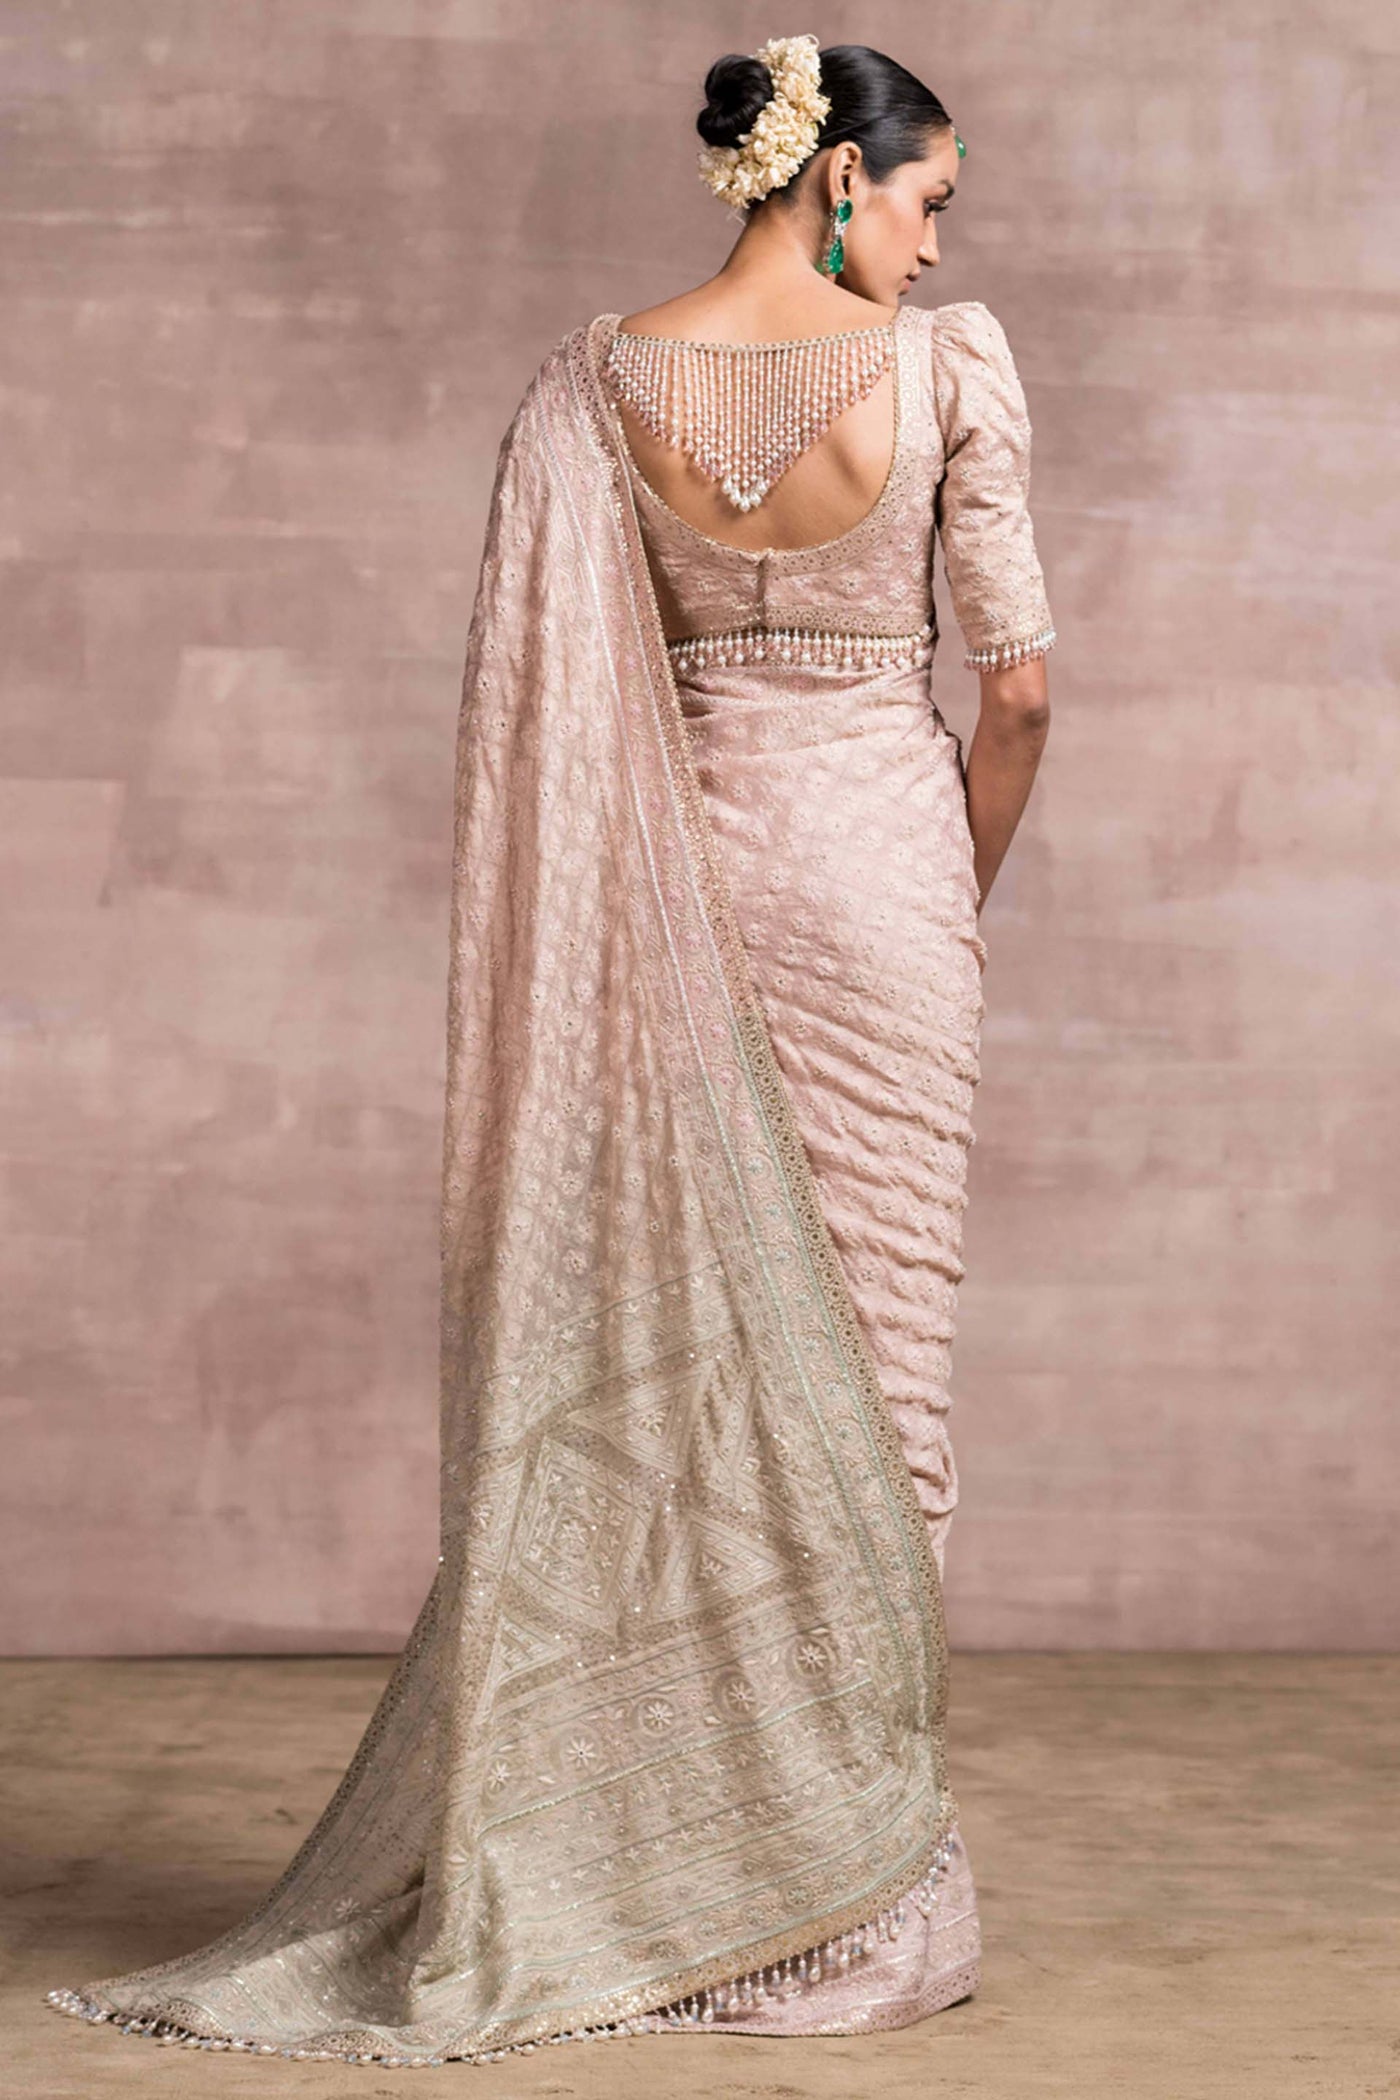 Tarun Tahiliani Ombré-Shaded Chikankari Saree With Matching Retro-Style Blouse gold peach bridal wedding occasion indian designer wear online shopping melange singapore